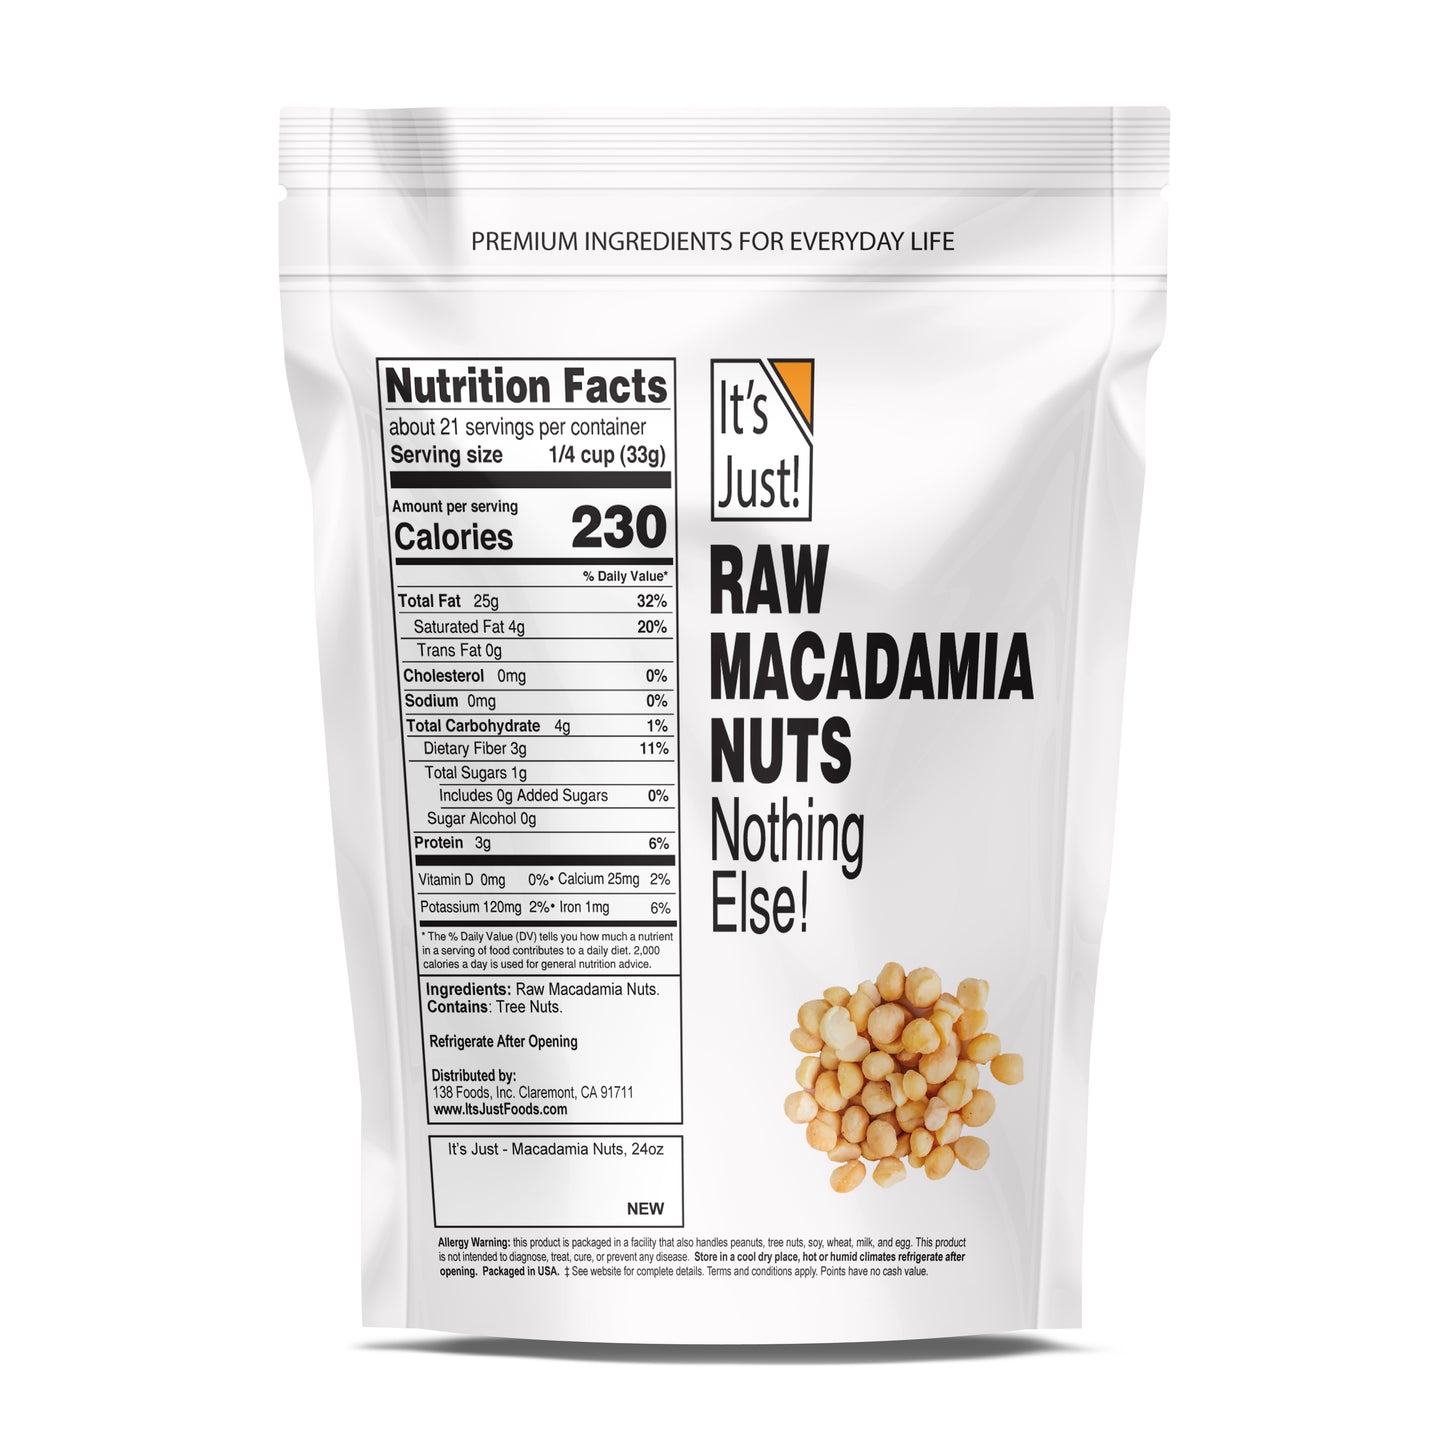 It's Just! - Raw Macadamia Nuts